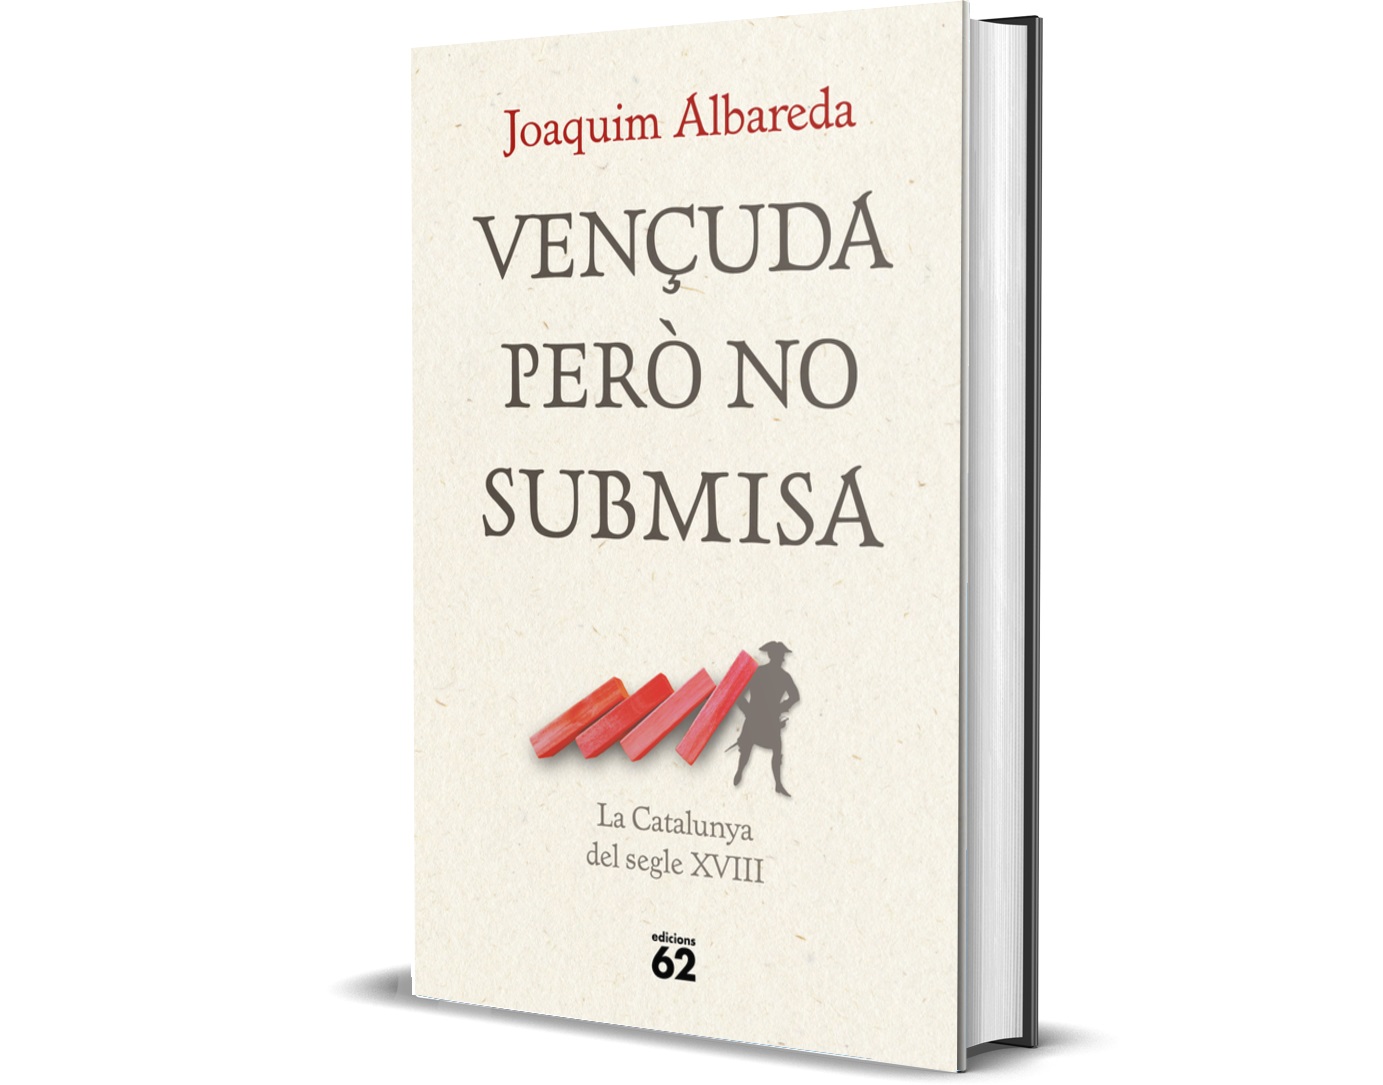 Joaquim Albareda pone luz a la historia política de la Cataluña del siglo XVIII con la obra “Vençuda però no submisa”